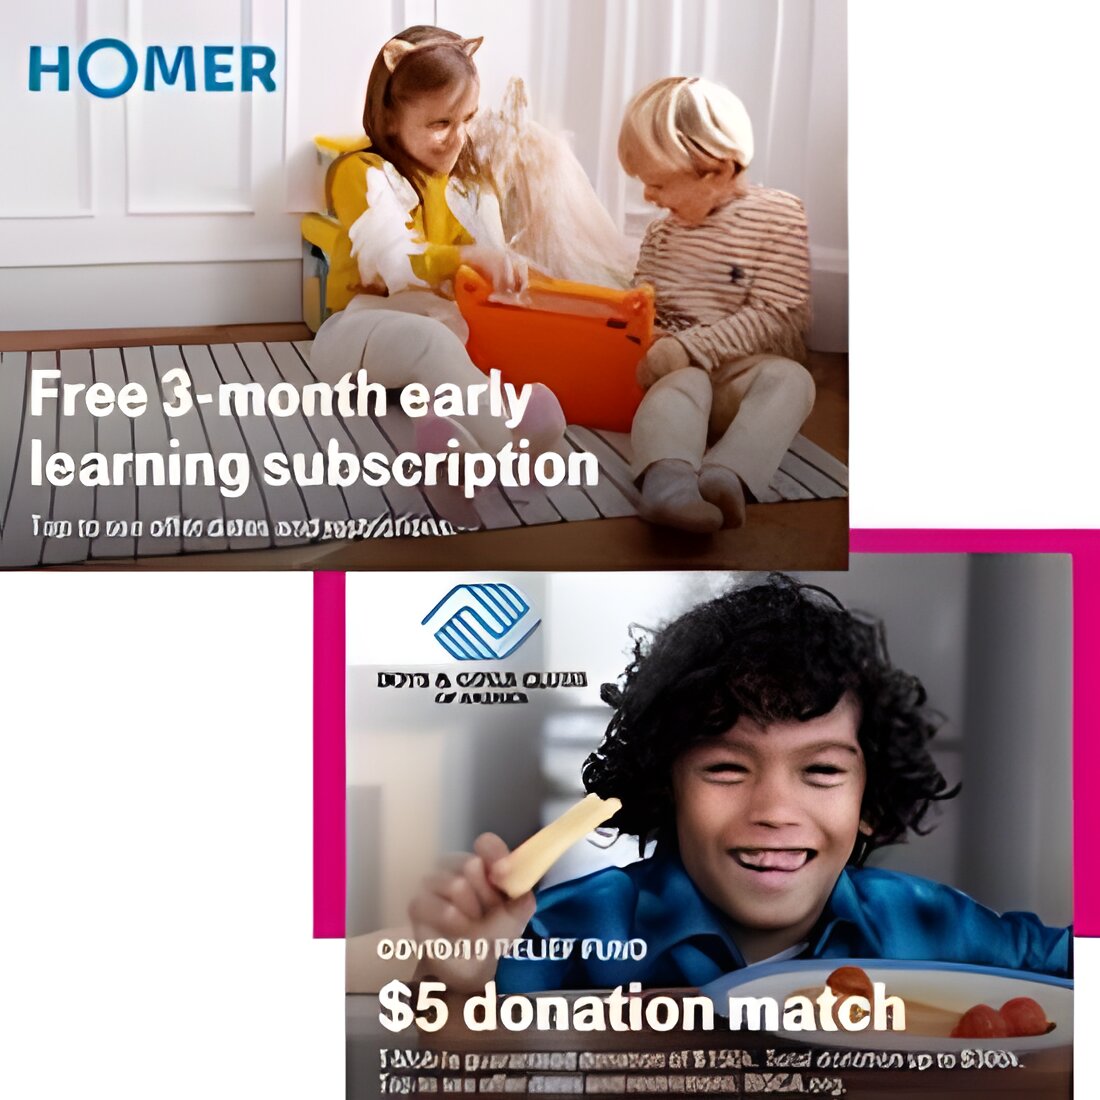 Free Stuff on T-Mobile Tuesdays